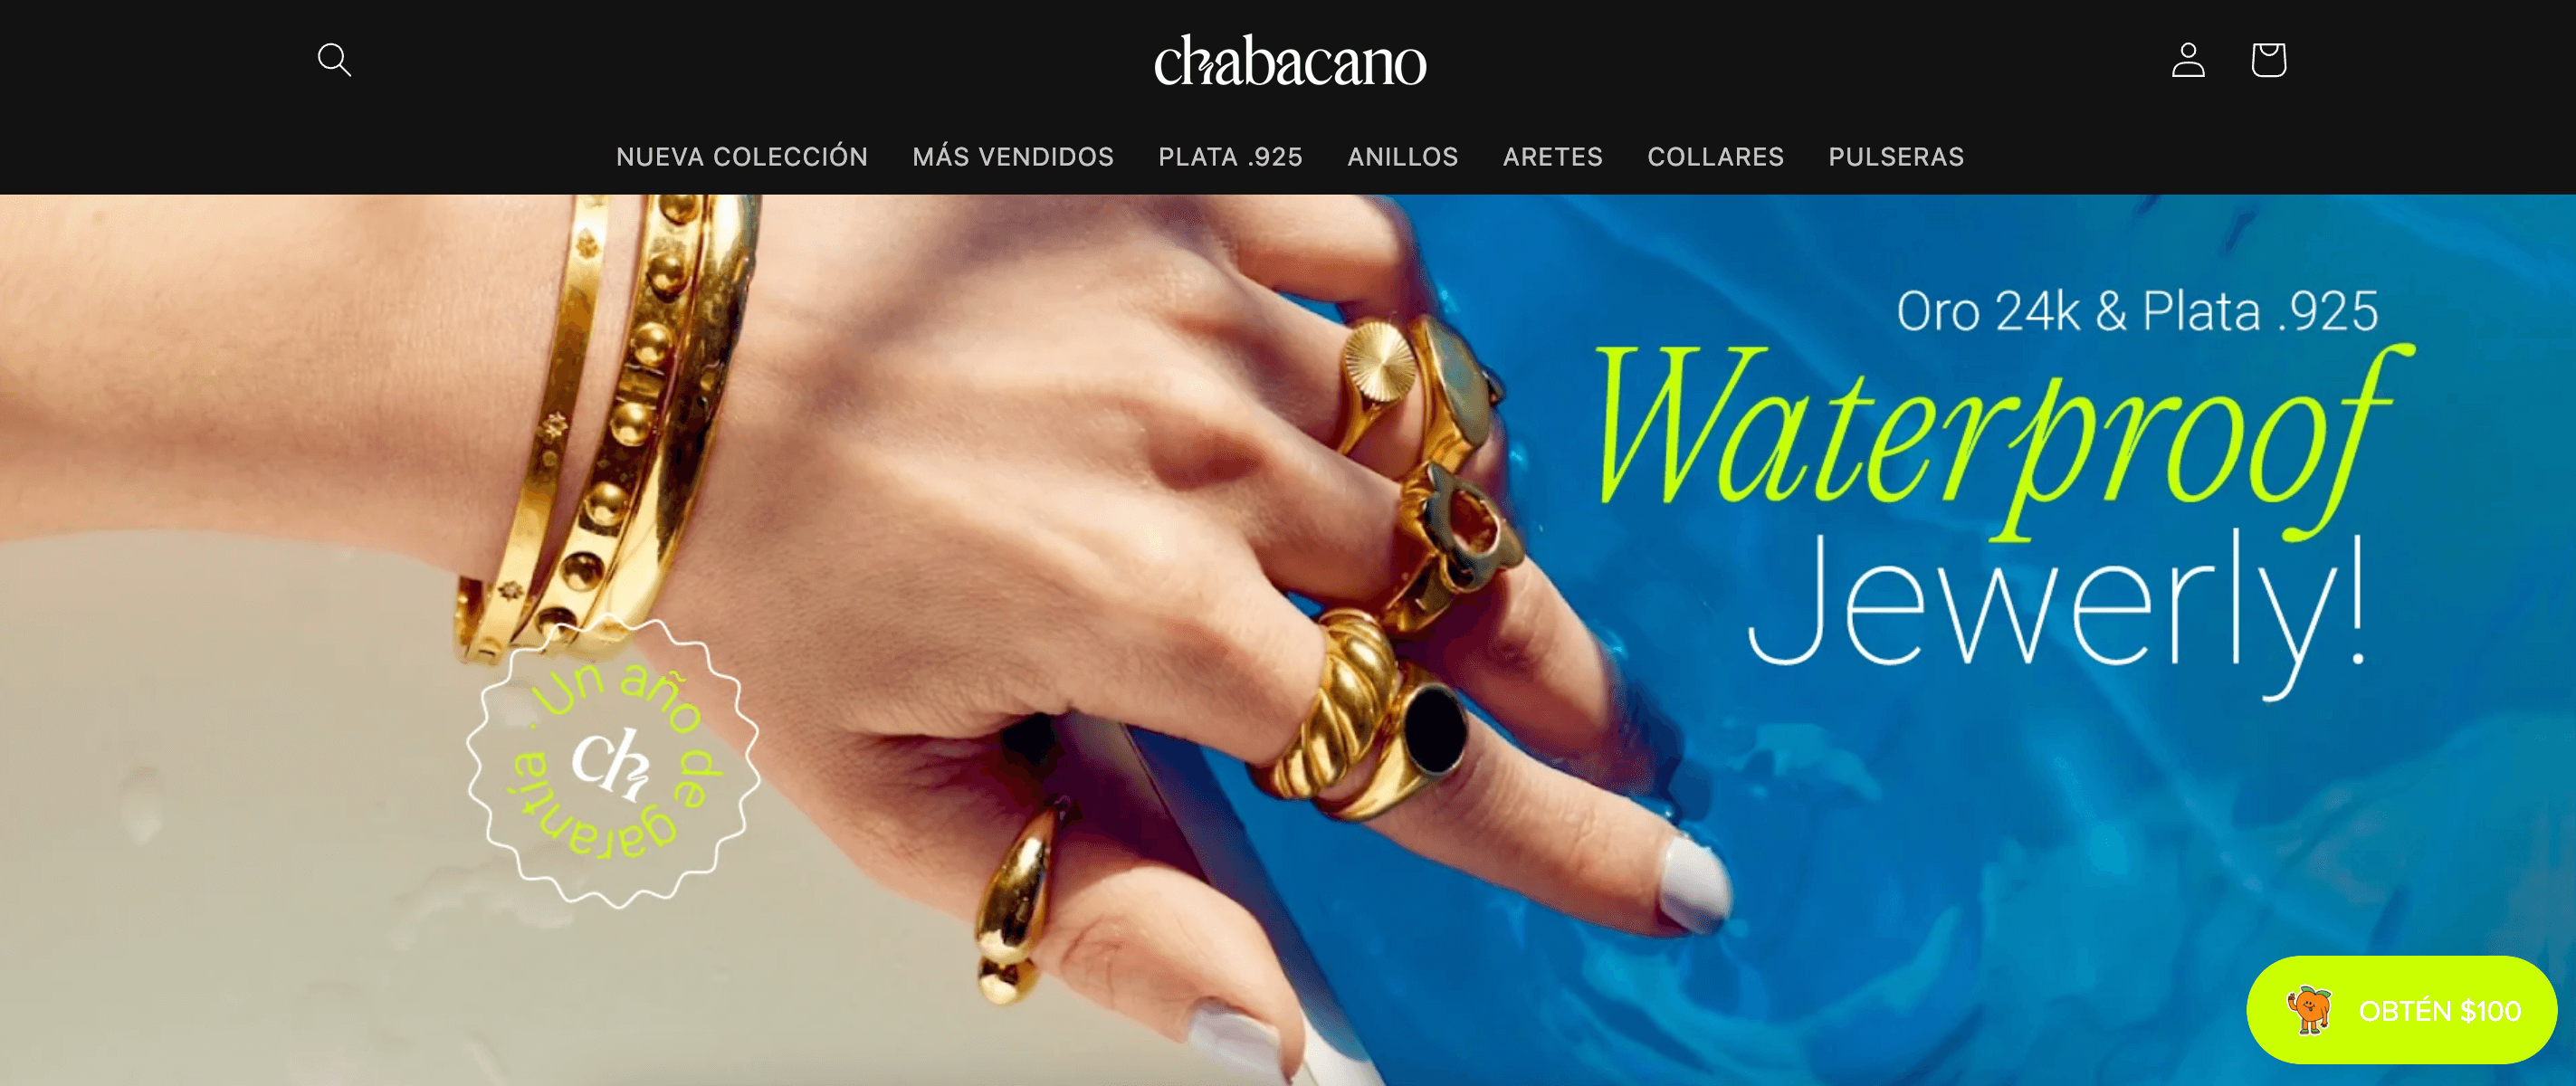 screenshot of ecommerce jewelry brand Chabacano homepage